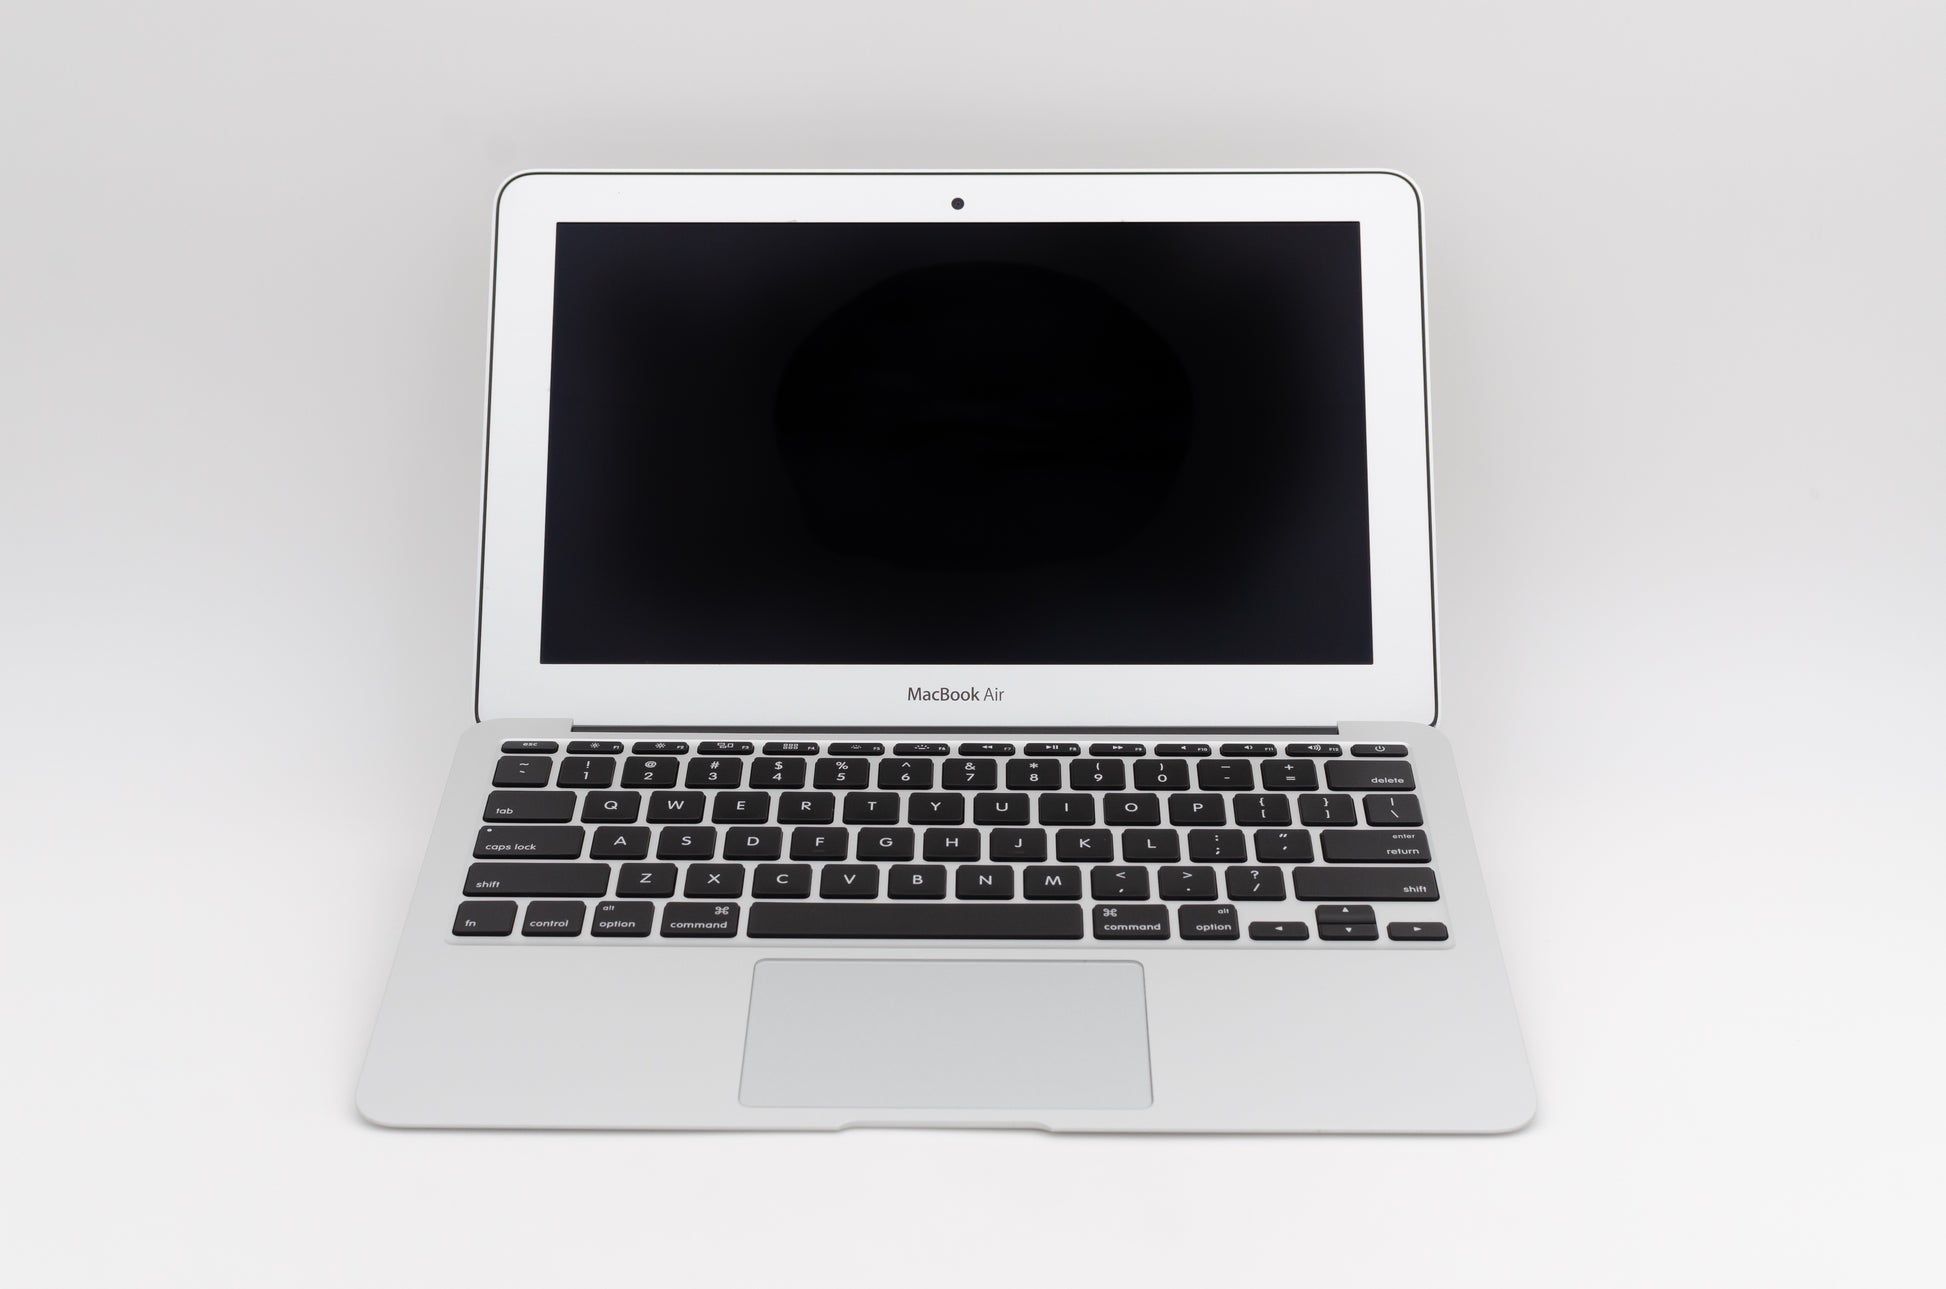 apple-mid-2013-11.6-inch-macbook-air-a1465-aluminum-dci7 - 1.7ghz processor, 4gb ram, hd 5000 - 1.5gb gpu-md711ll/a-5